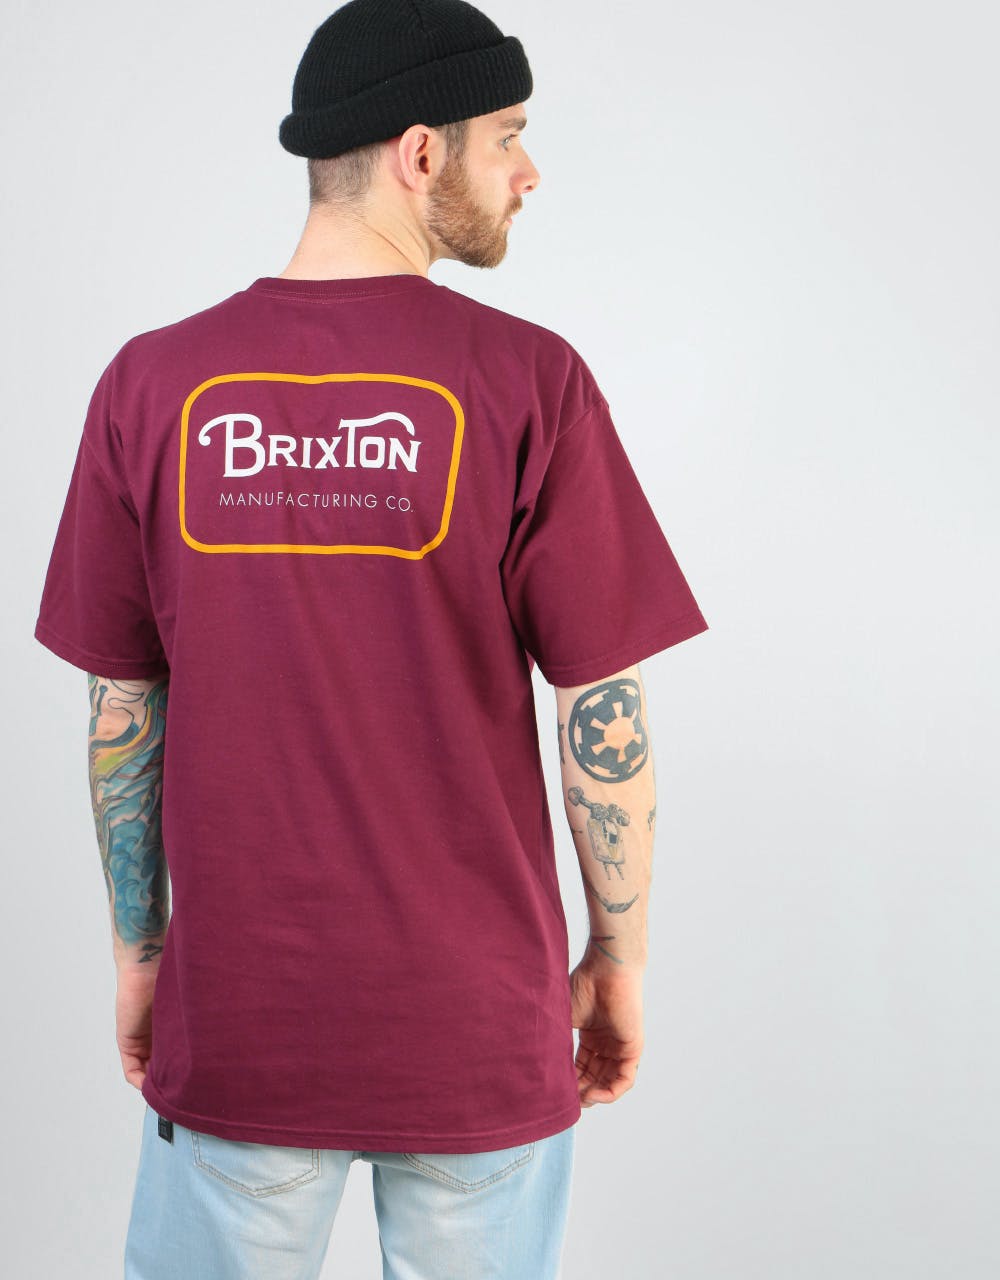 Brixton Grade T-Shirt - Burgundy/Gold